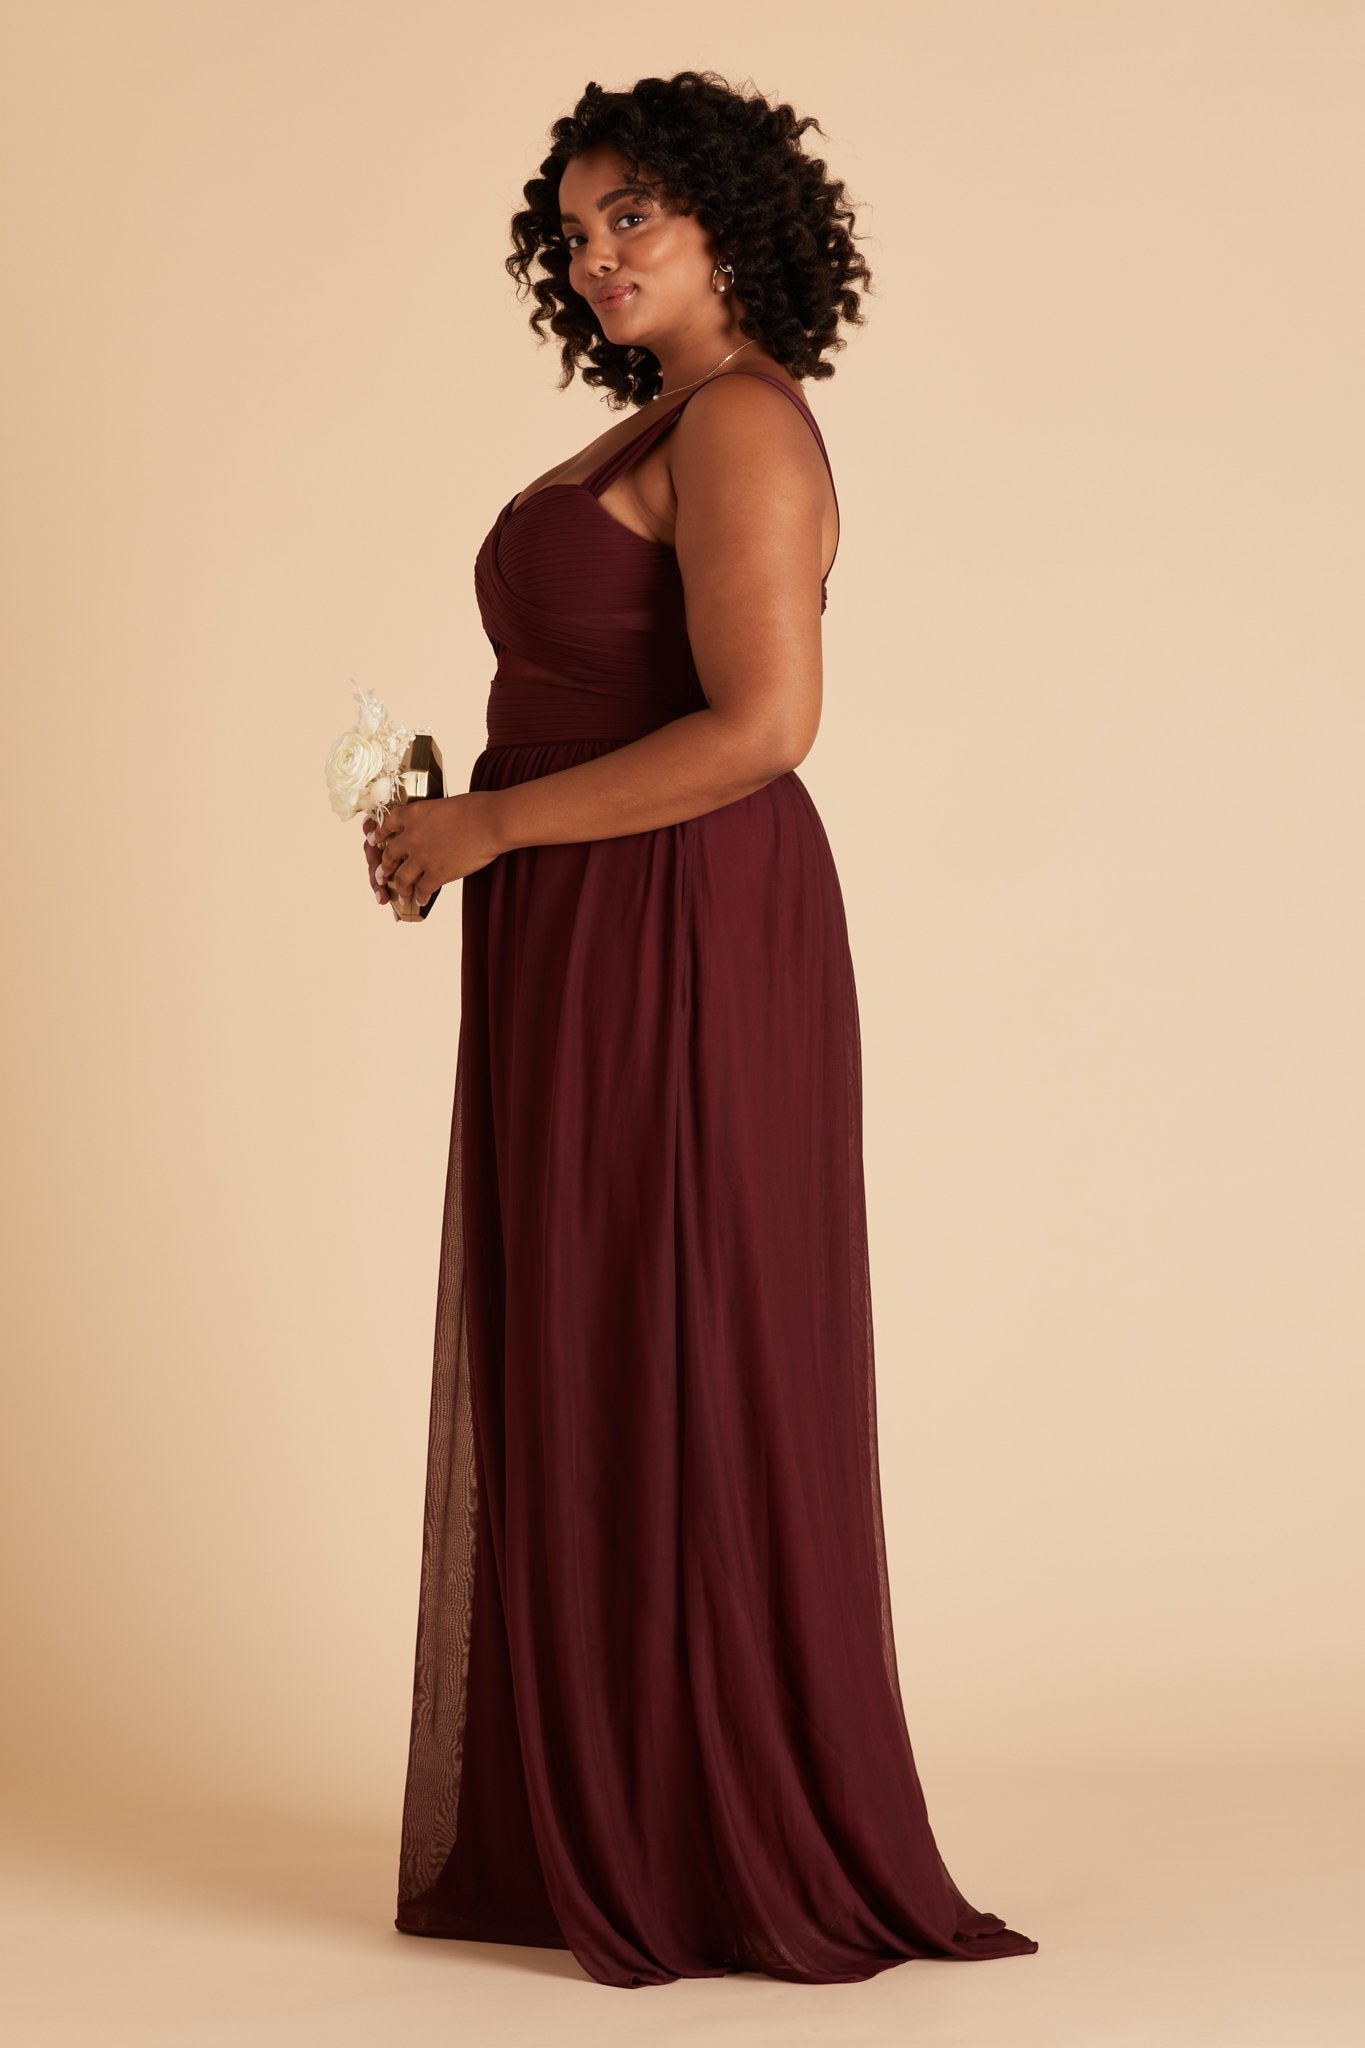 Elsye plus size bridesmaid dress in cabernet burgundy chiffon by Birdy Grey, side view